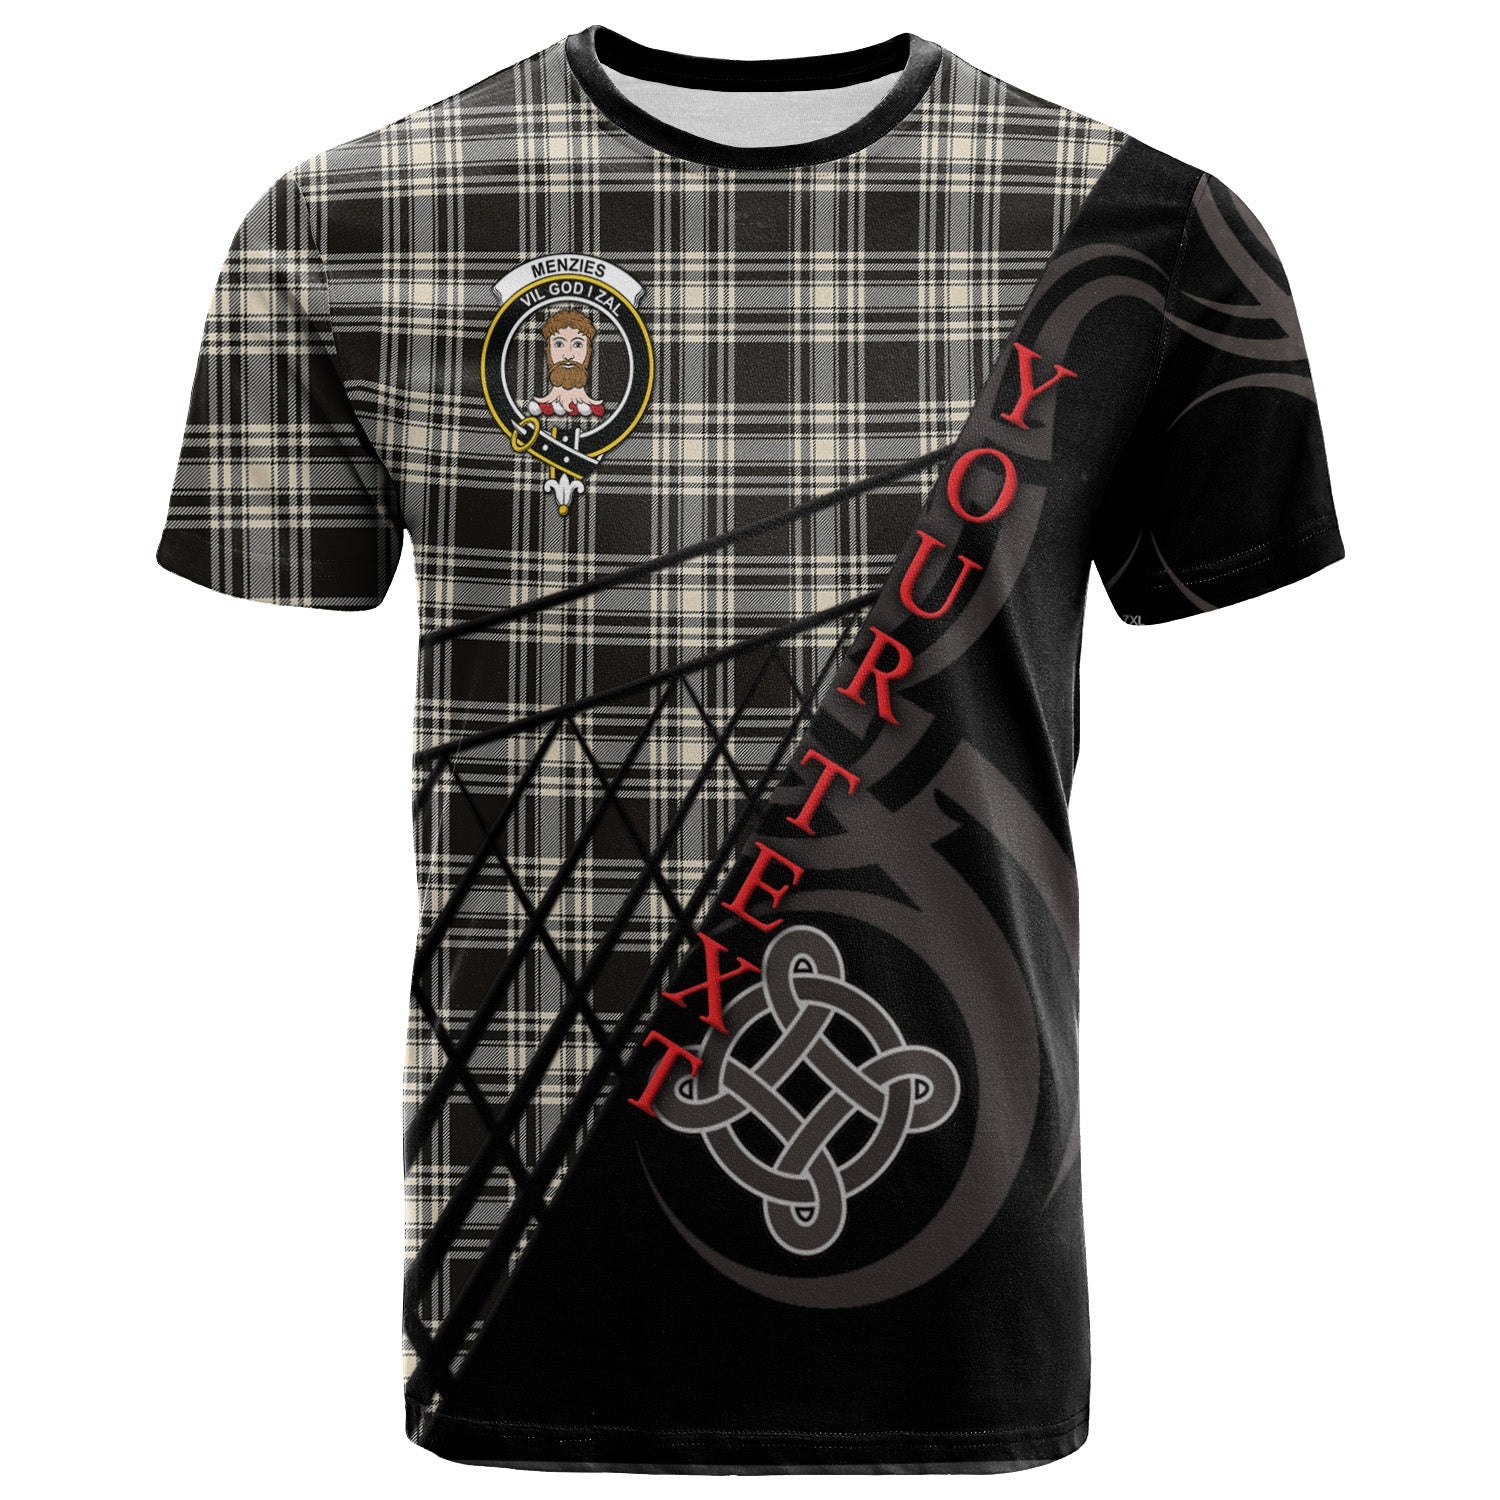 scottish-menzies-black-and-white-ancient-clan-crest-tartan-pattern-celtic-t-shirt